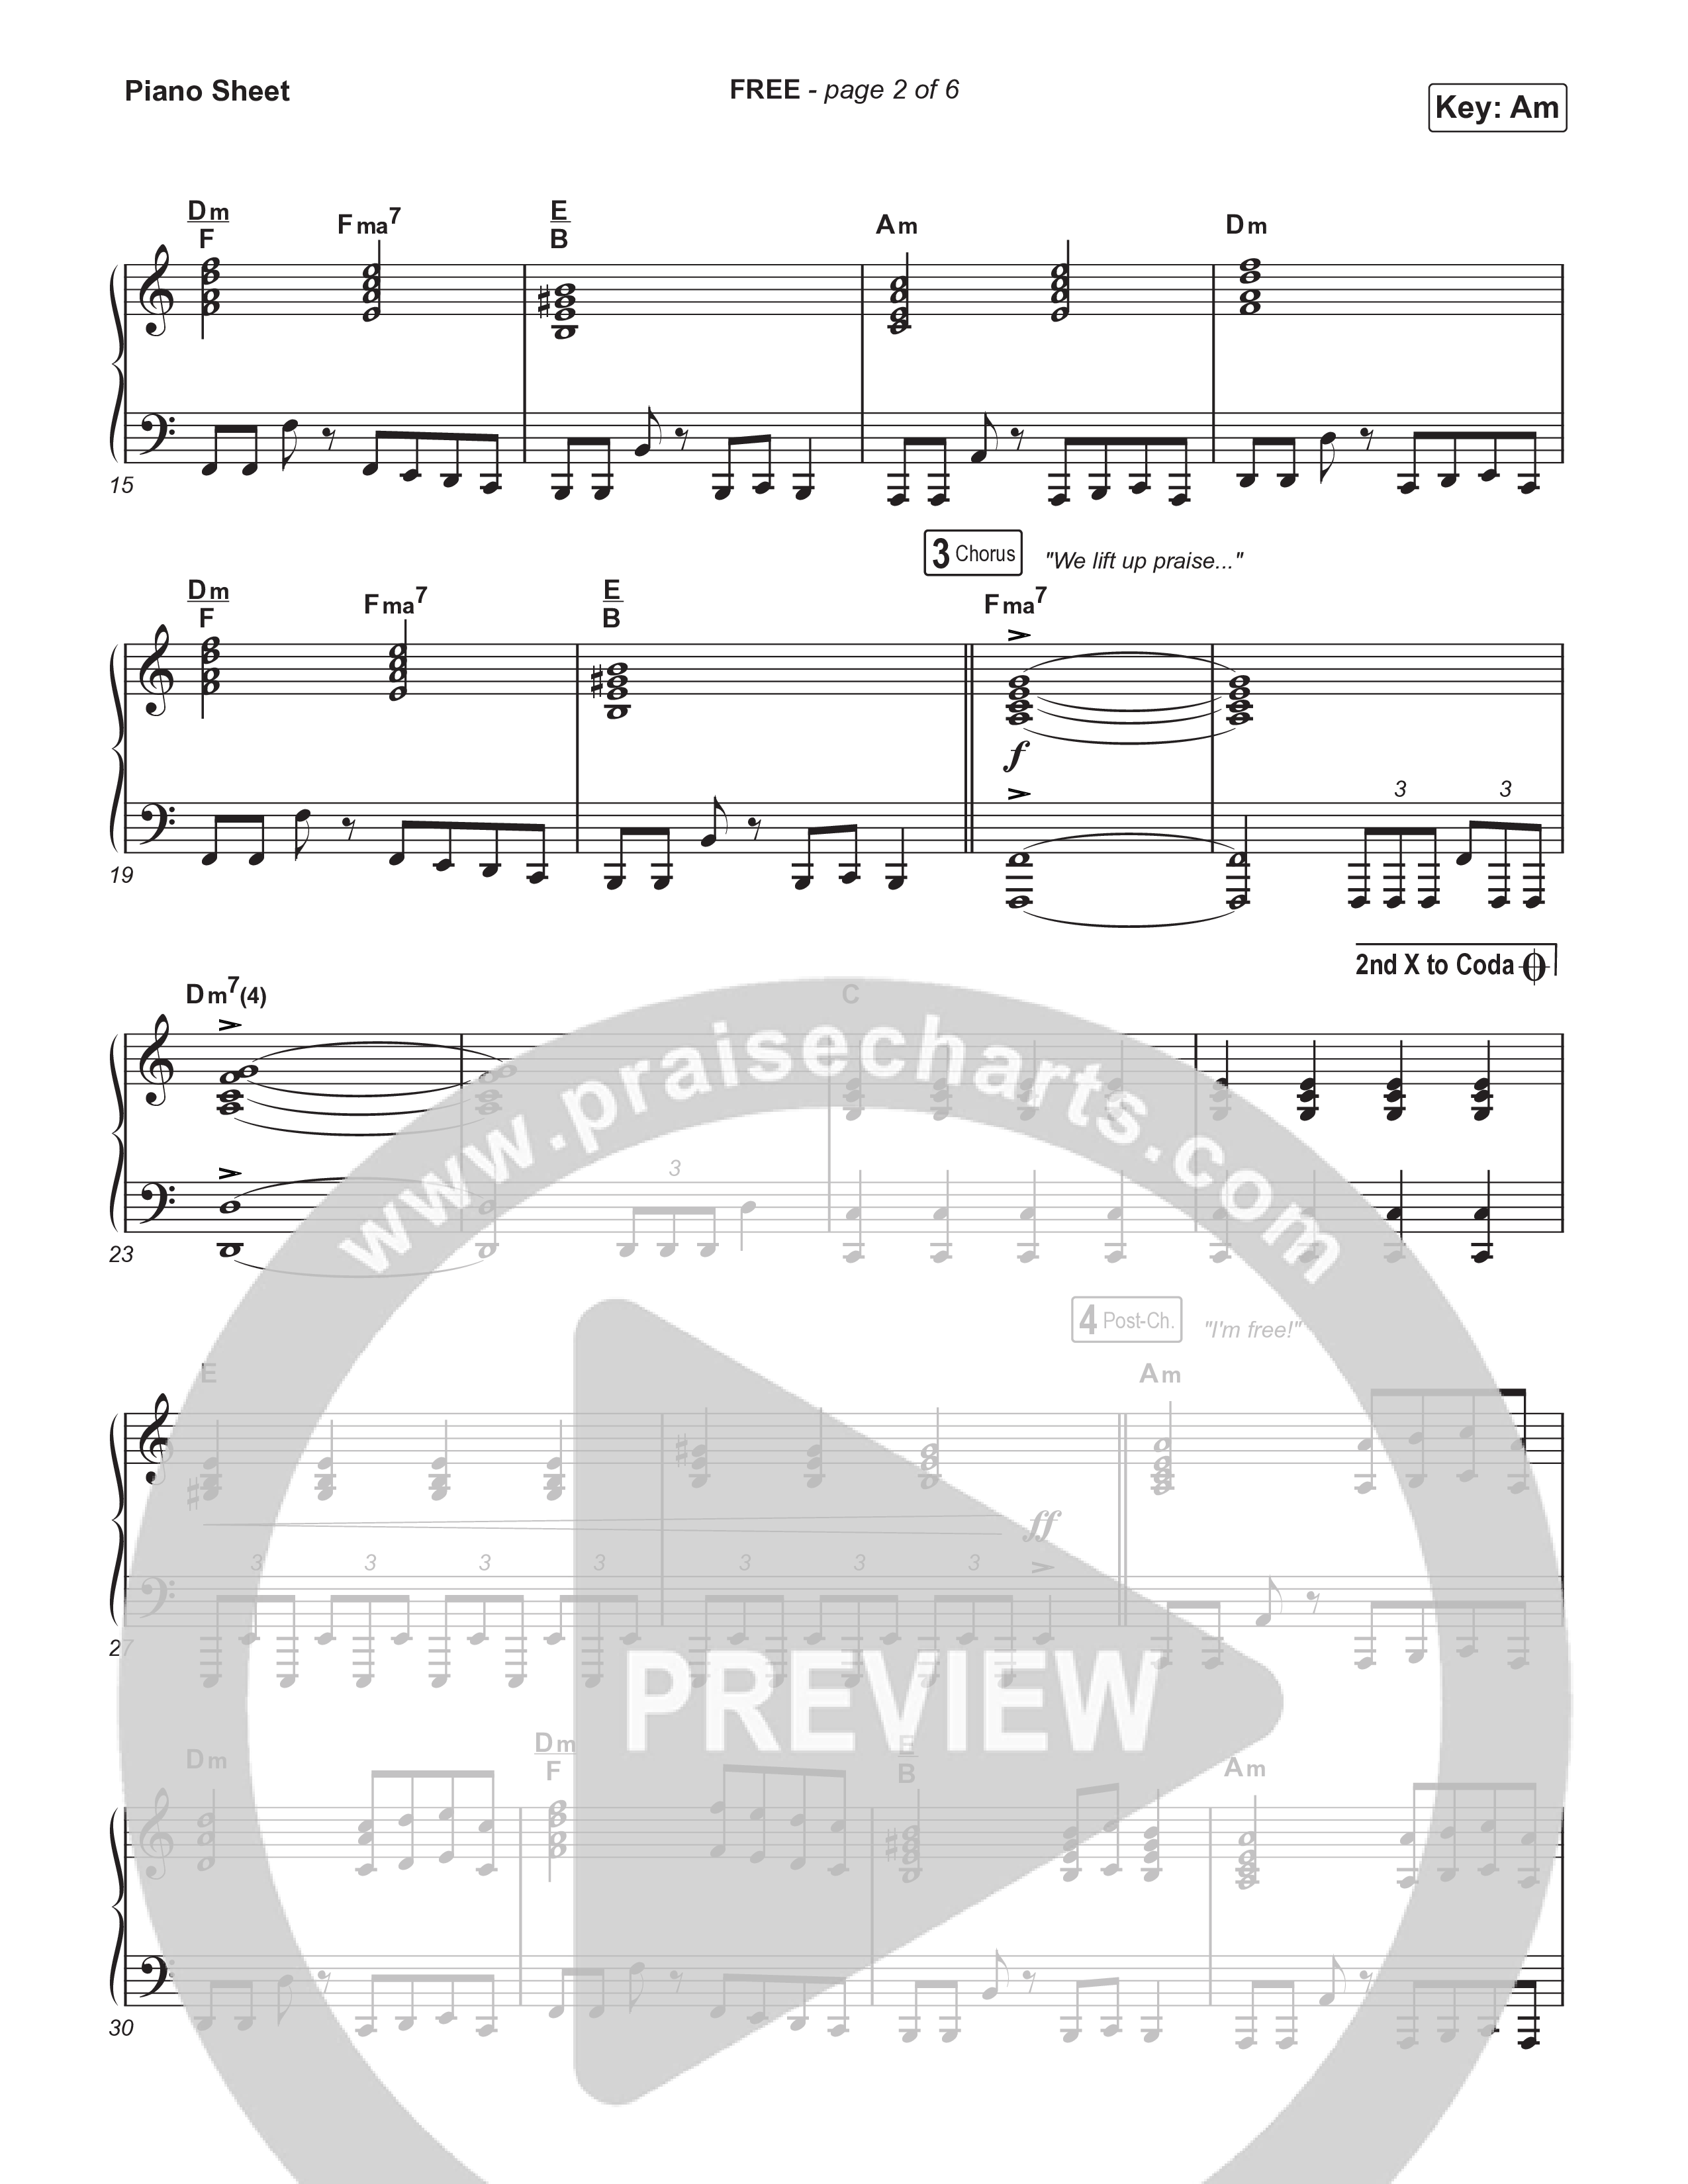 FREE Piano Sheet (SEU Worship)